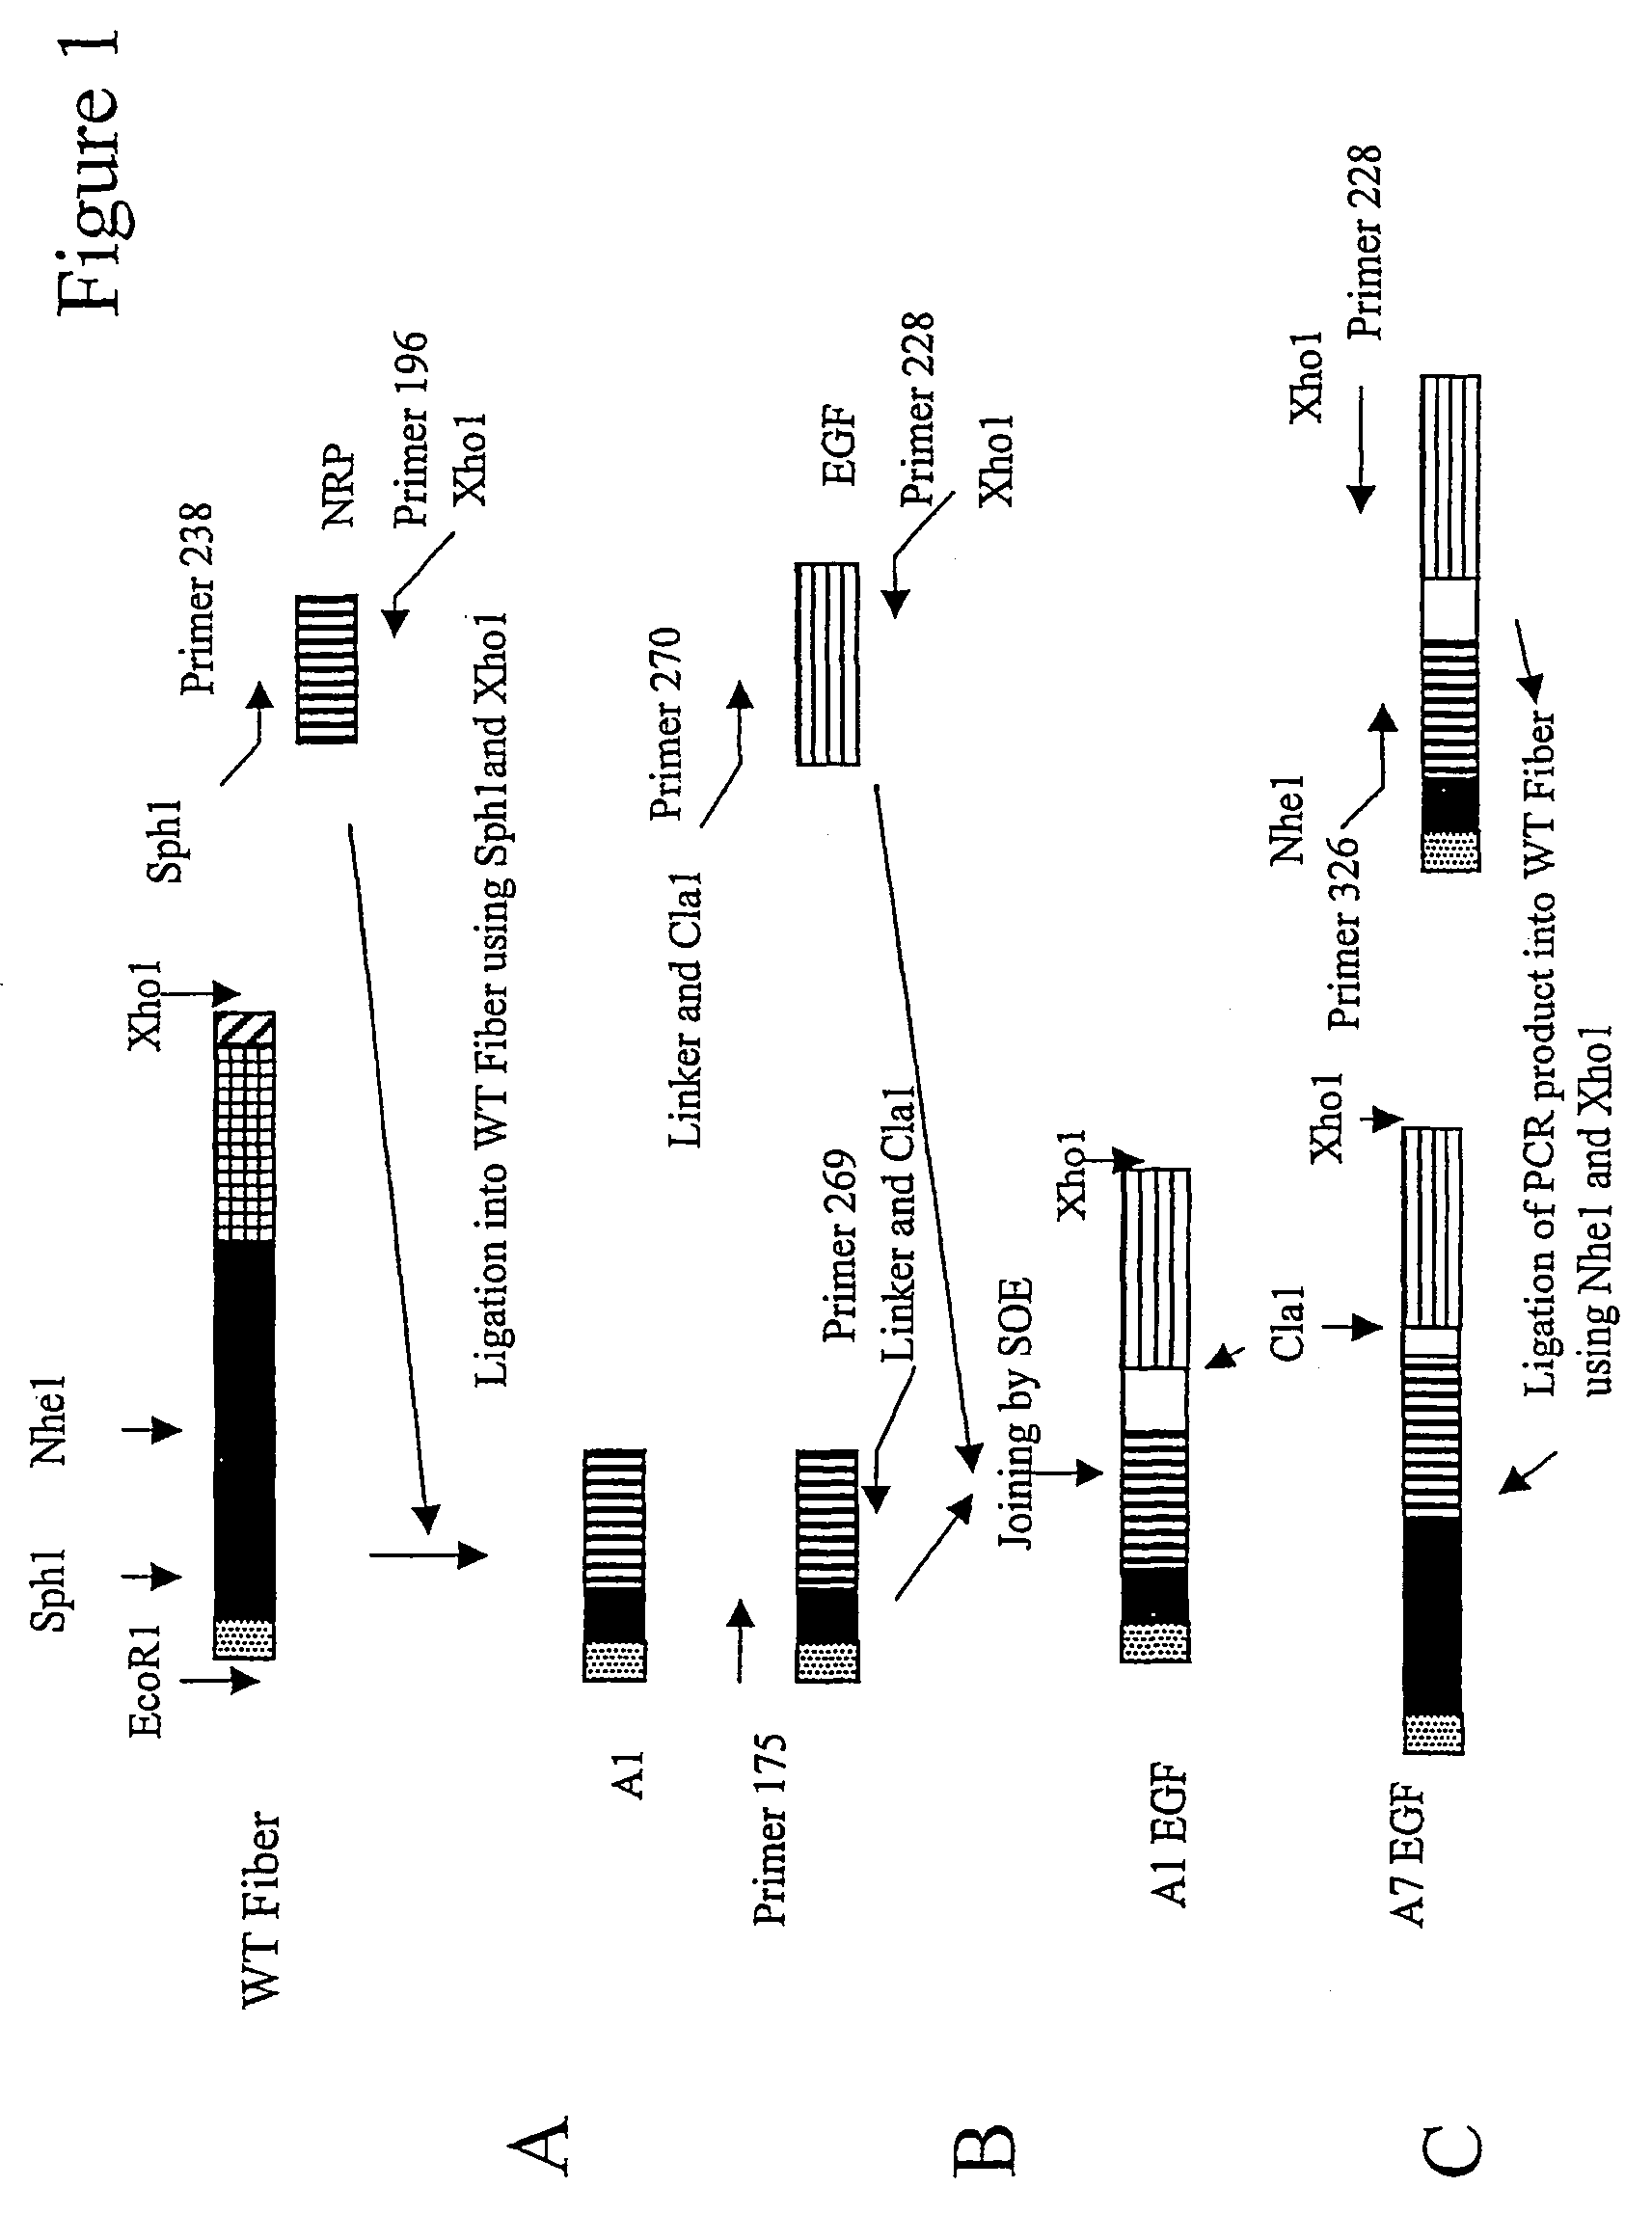 Modified virus comprising one or more non-native polypeptides